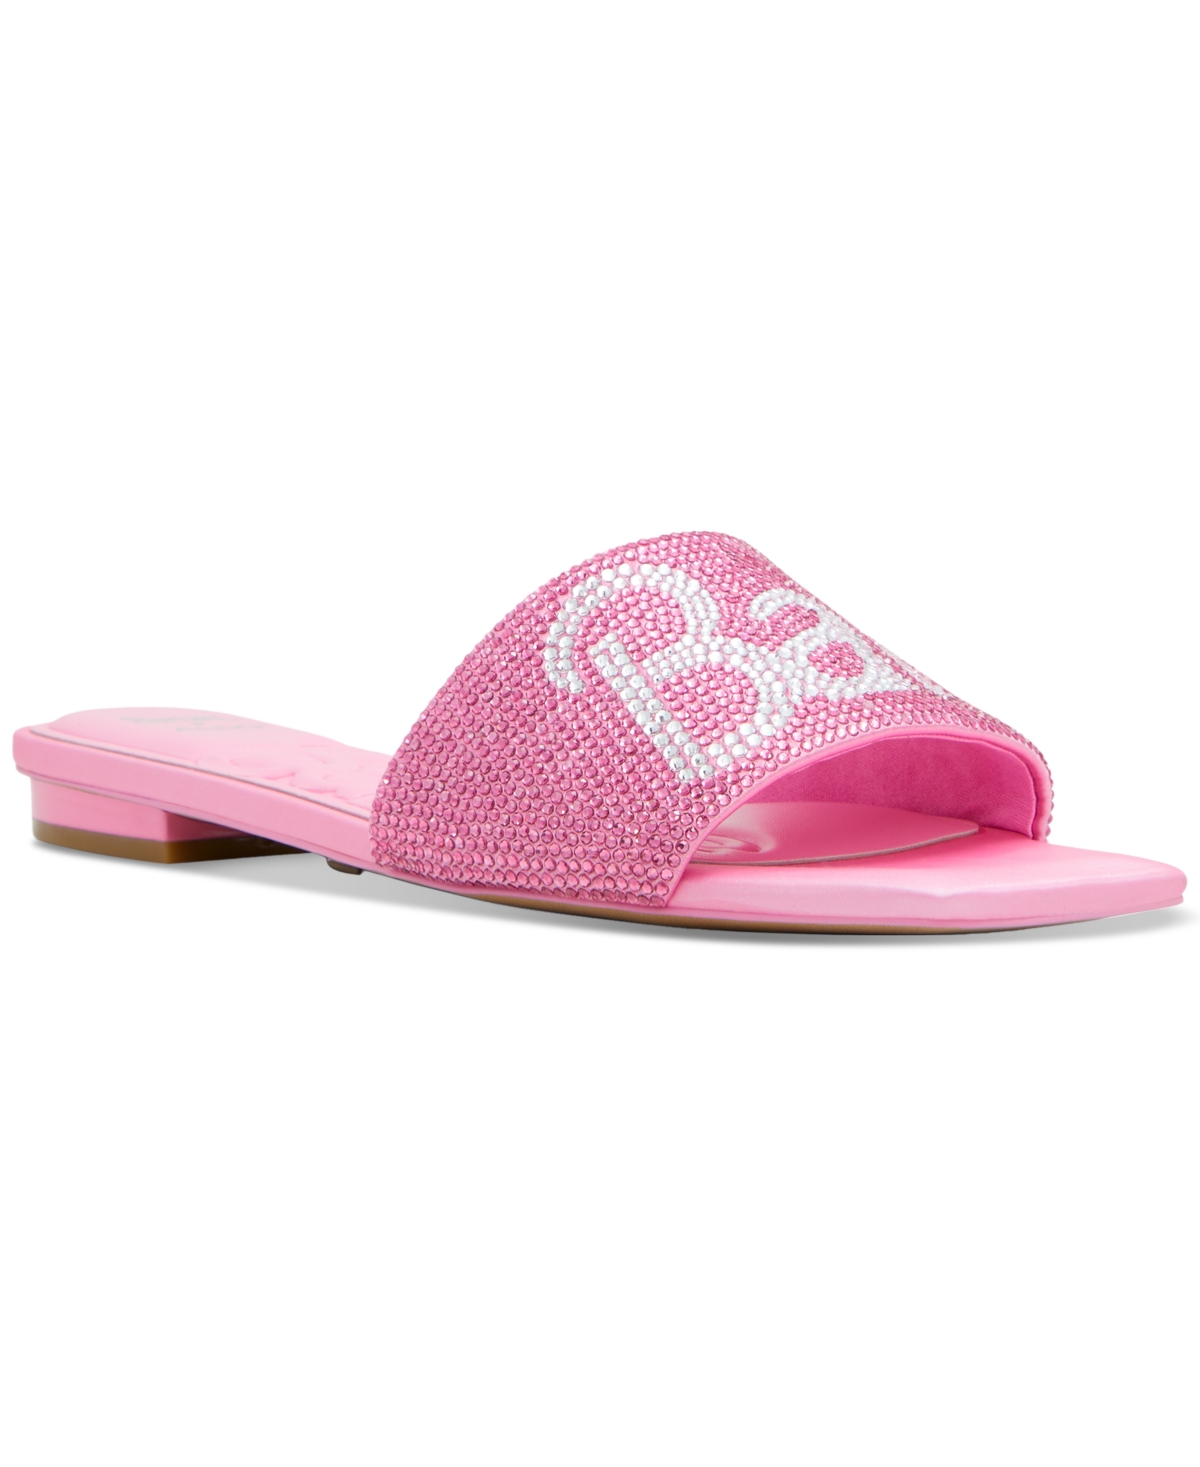 x Barbie Women's Barbieville Flat Slide Sandals - Pink Satin/Rhinestone